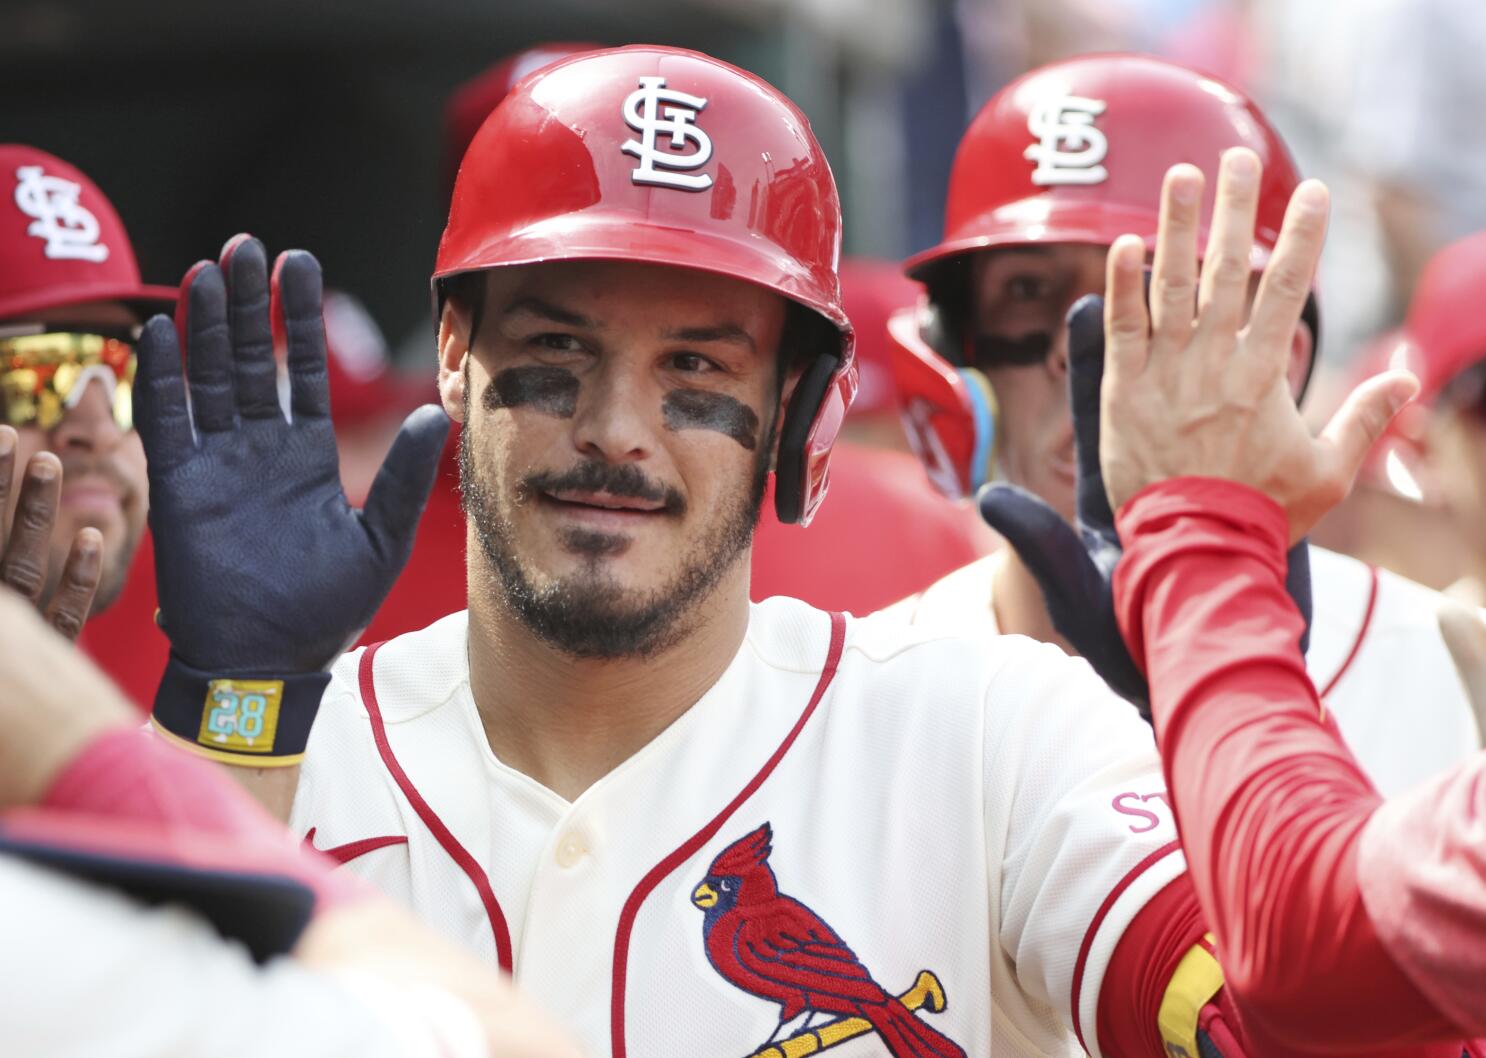 Cardinals win 2021 MLB opener in Cincinnati slugfest